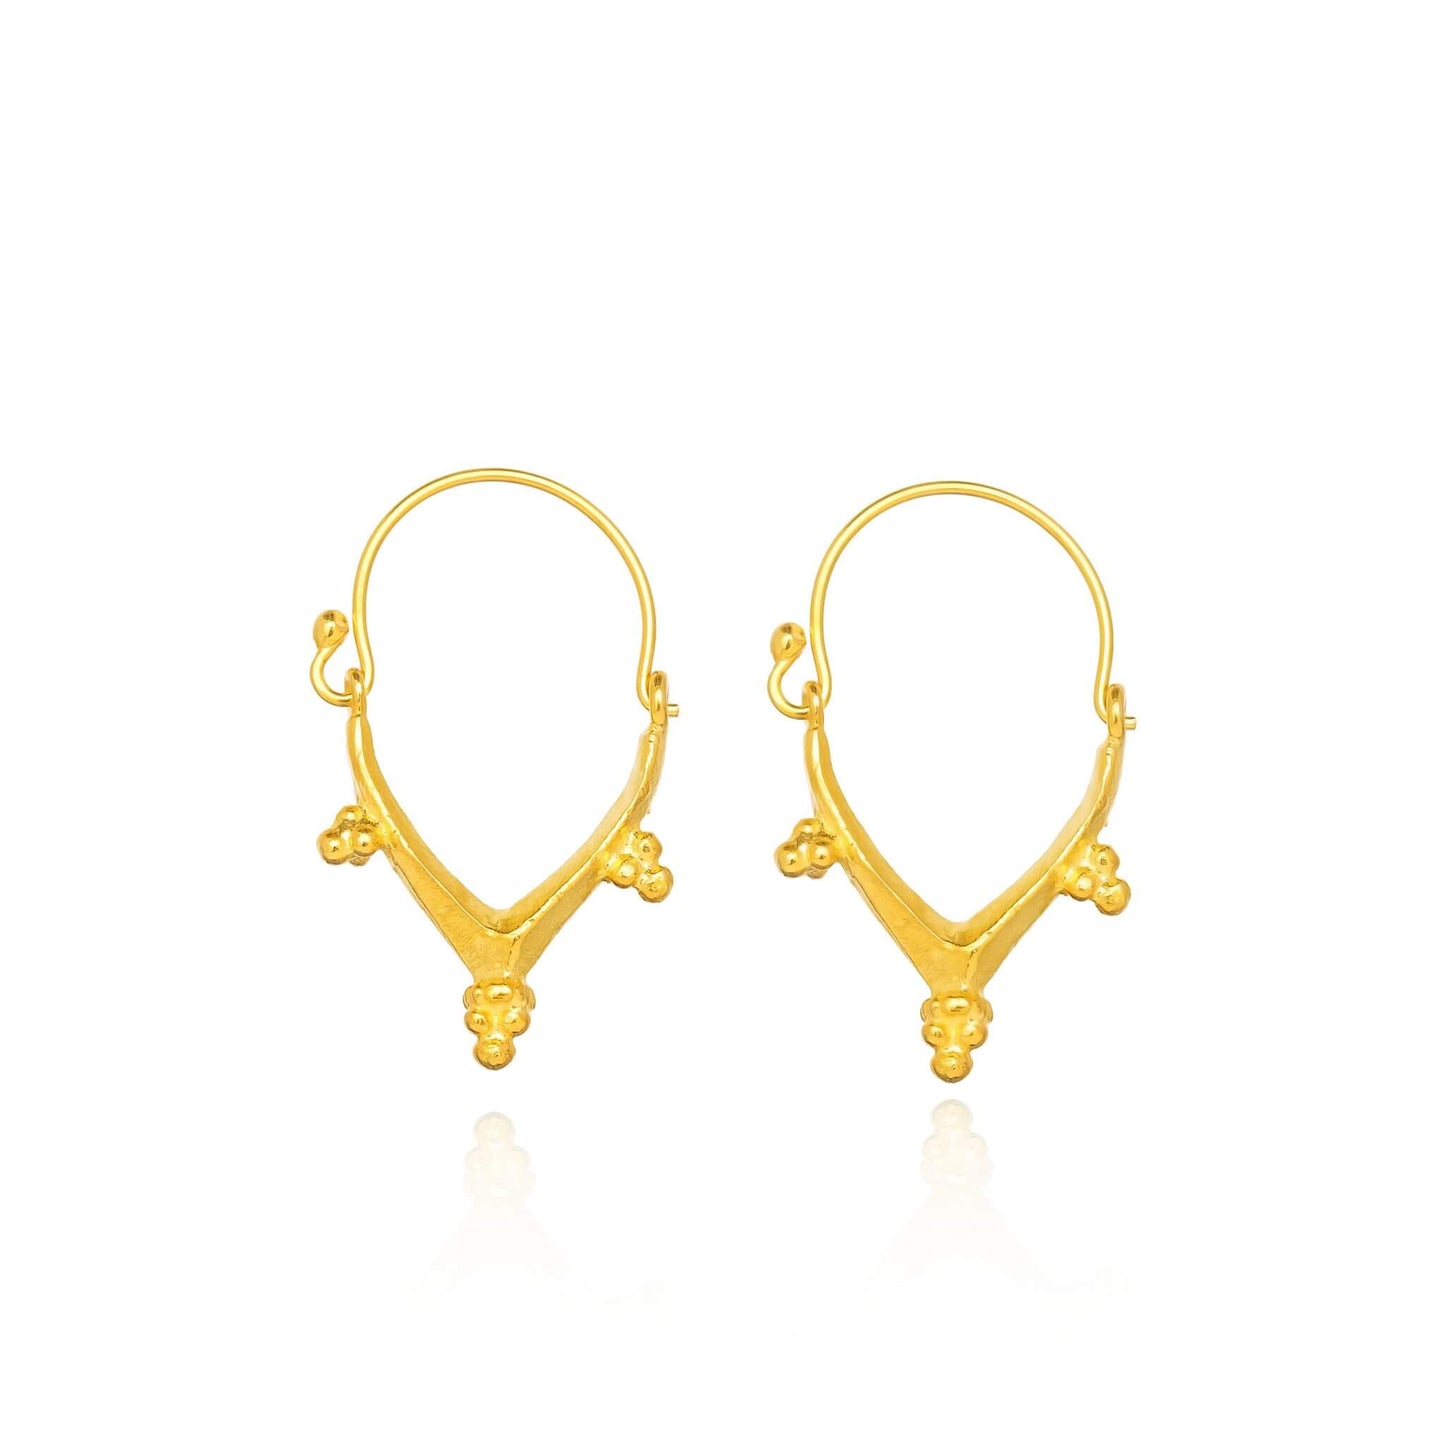 ethnic/indian style hoop earrings in gold